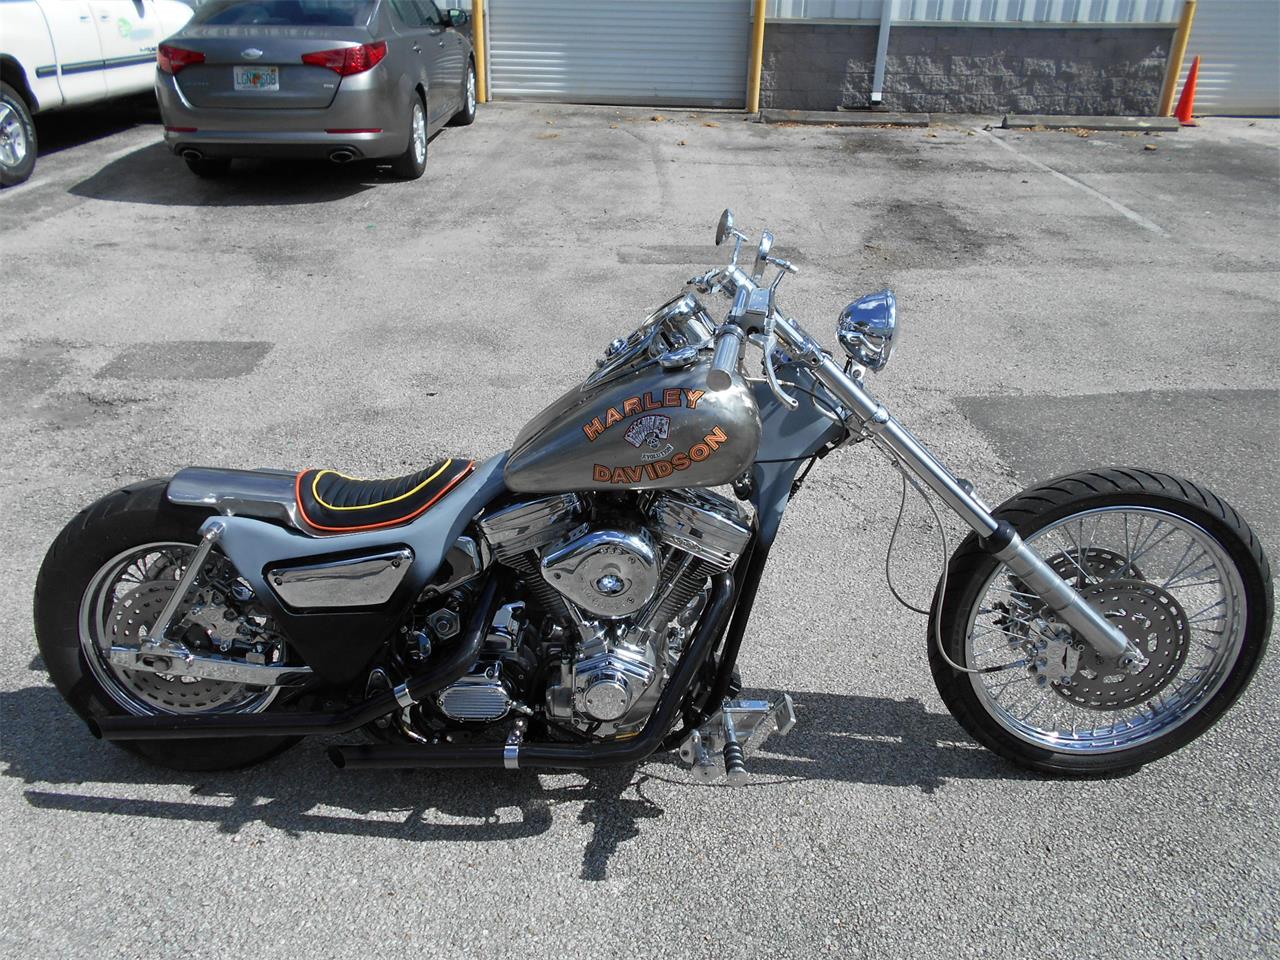 Harley Davidson Marlboro Man Bike For Sale Off 77 Medpharmres Com